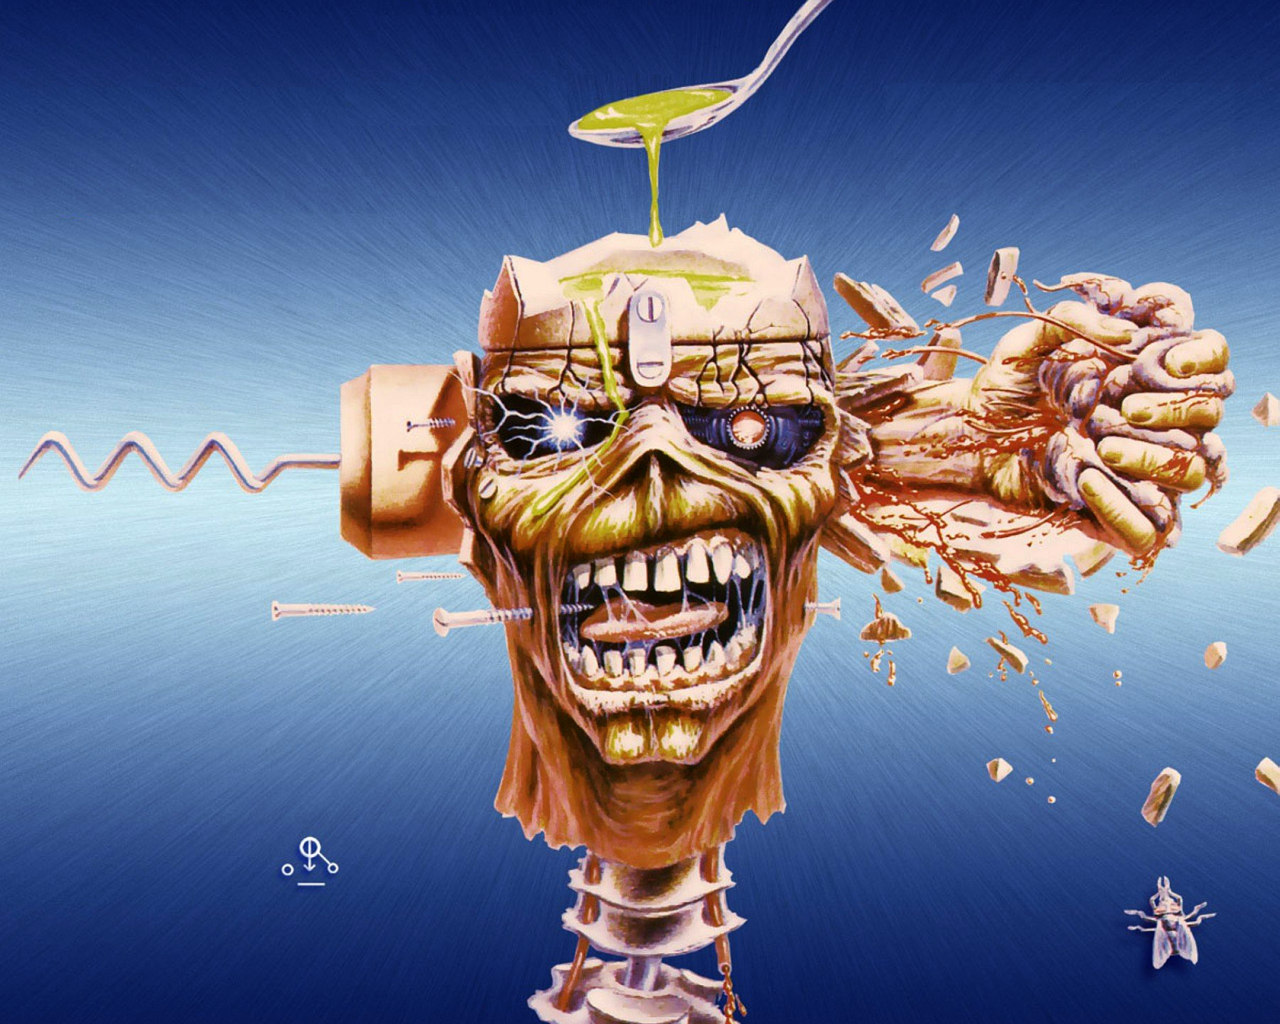 Iron Maiden Album Cover Art   Derek Riggs Artworks 1280x1024 Wallpaper